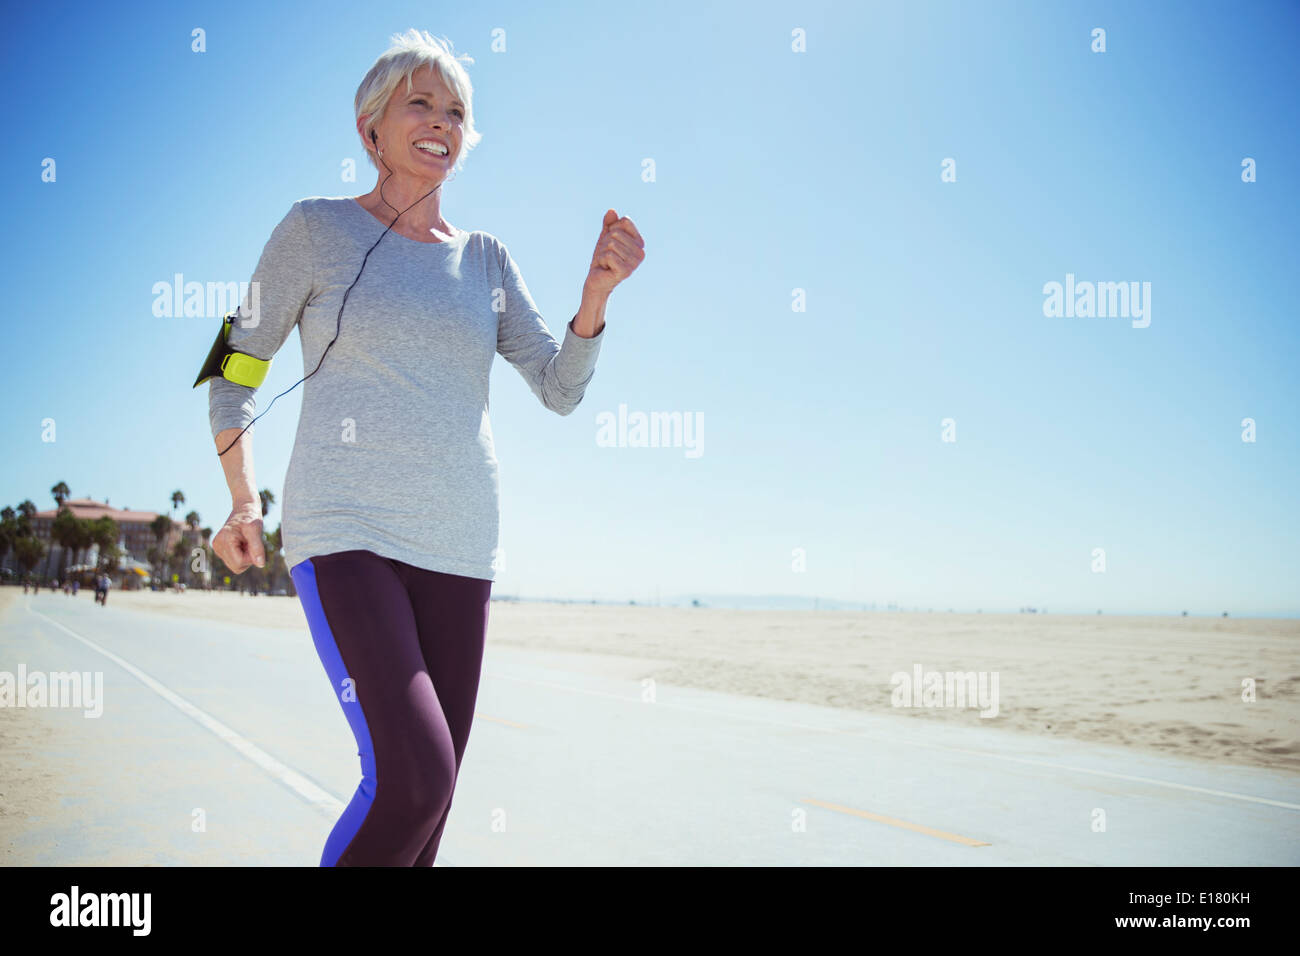 Senior woman jogging on beach boardwalk Banque D'Images